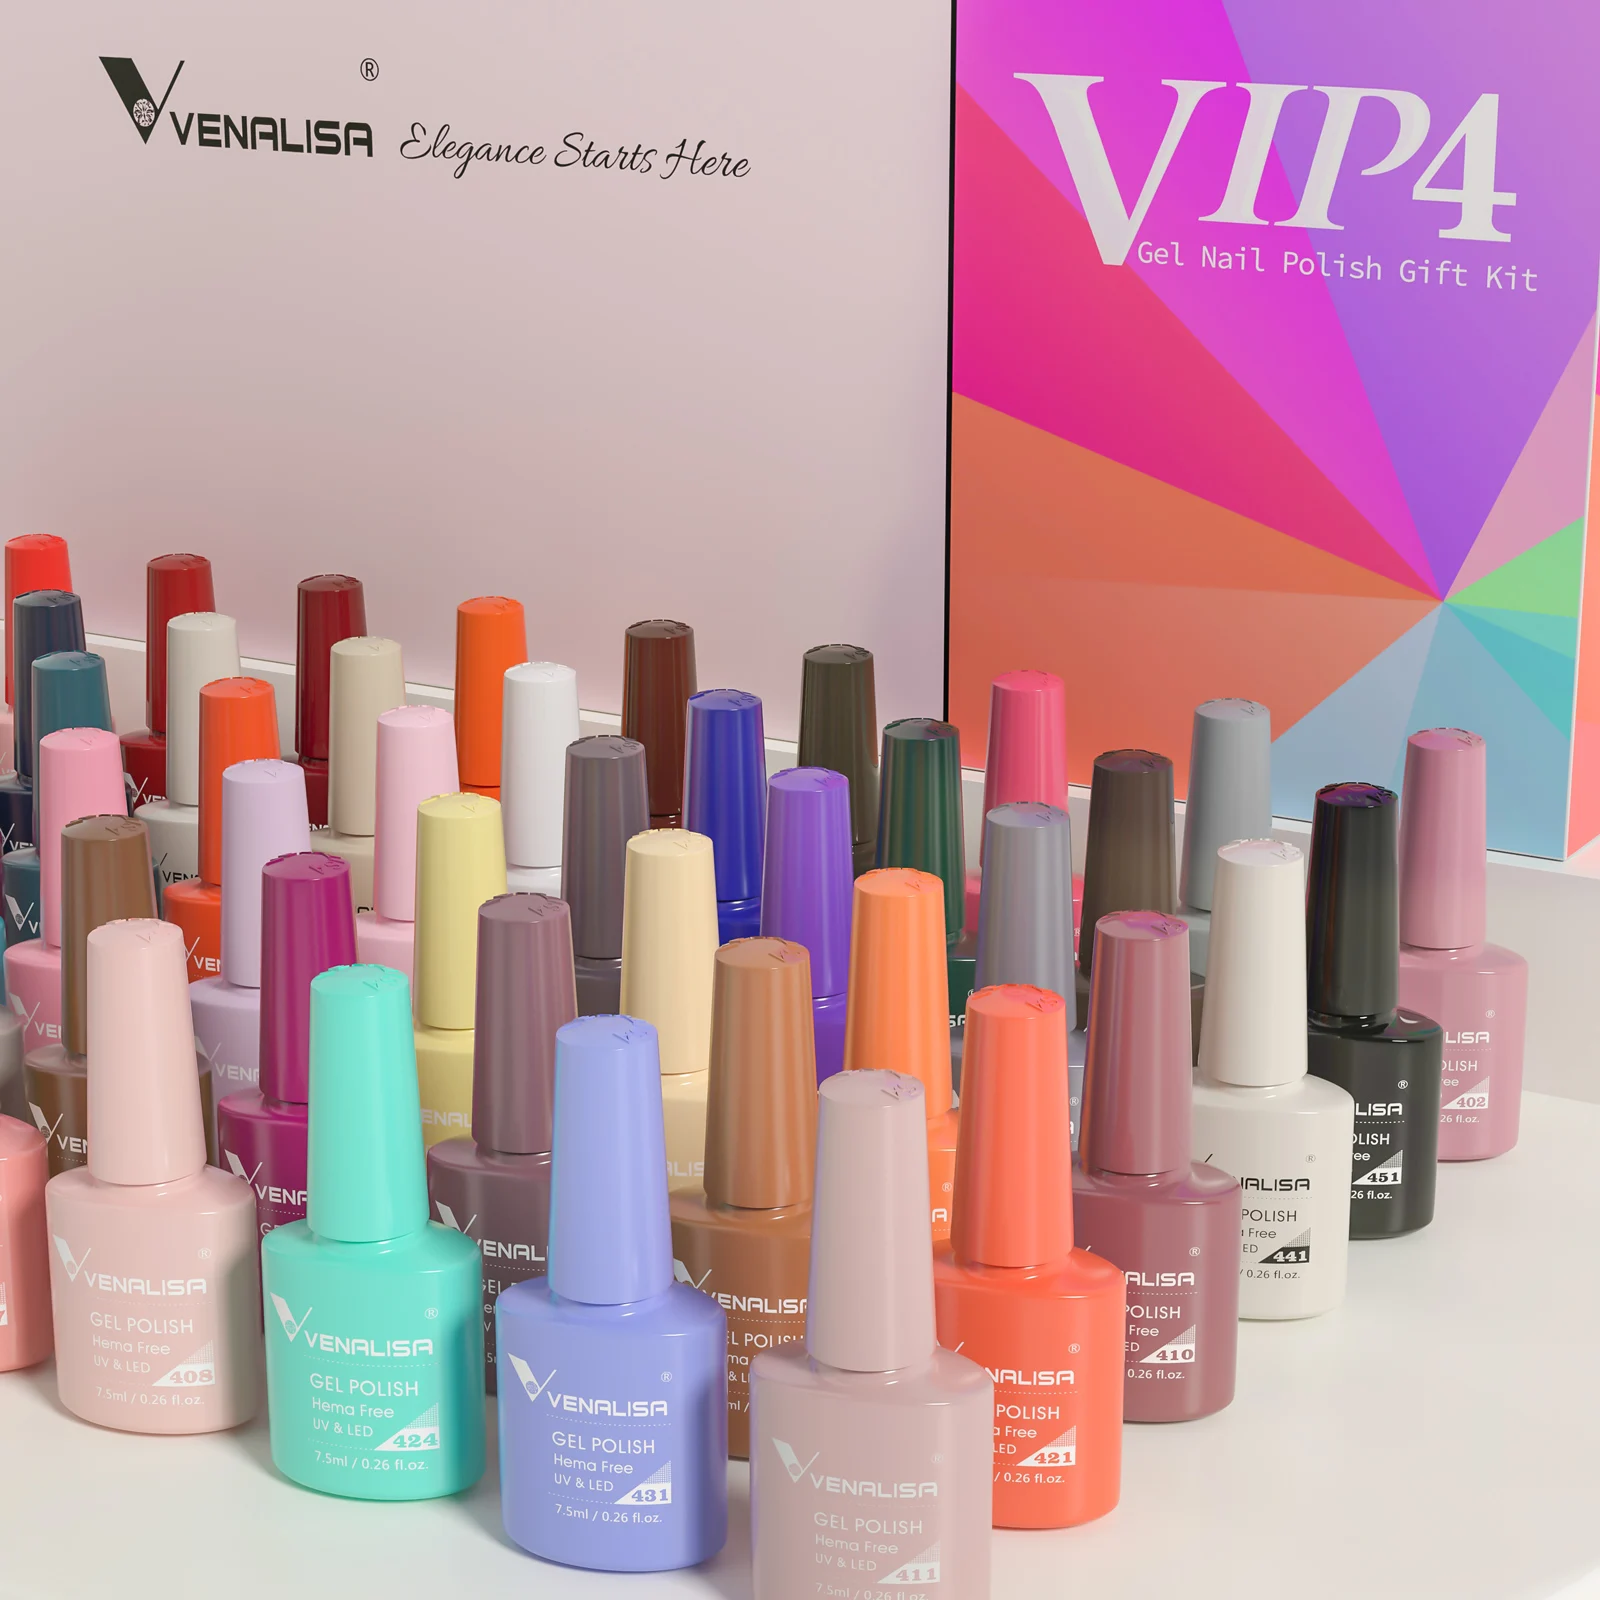 Venalisa-VIP4 네일 젤 폴리쉬 7.5ml, 신제품, UV LED 젤 바니시, 풀 커버리지, 슈퍼 텍스처, 화려한 네일 매니큐어